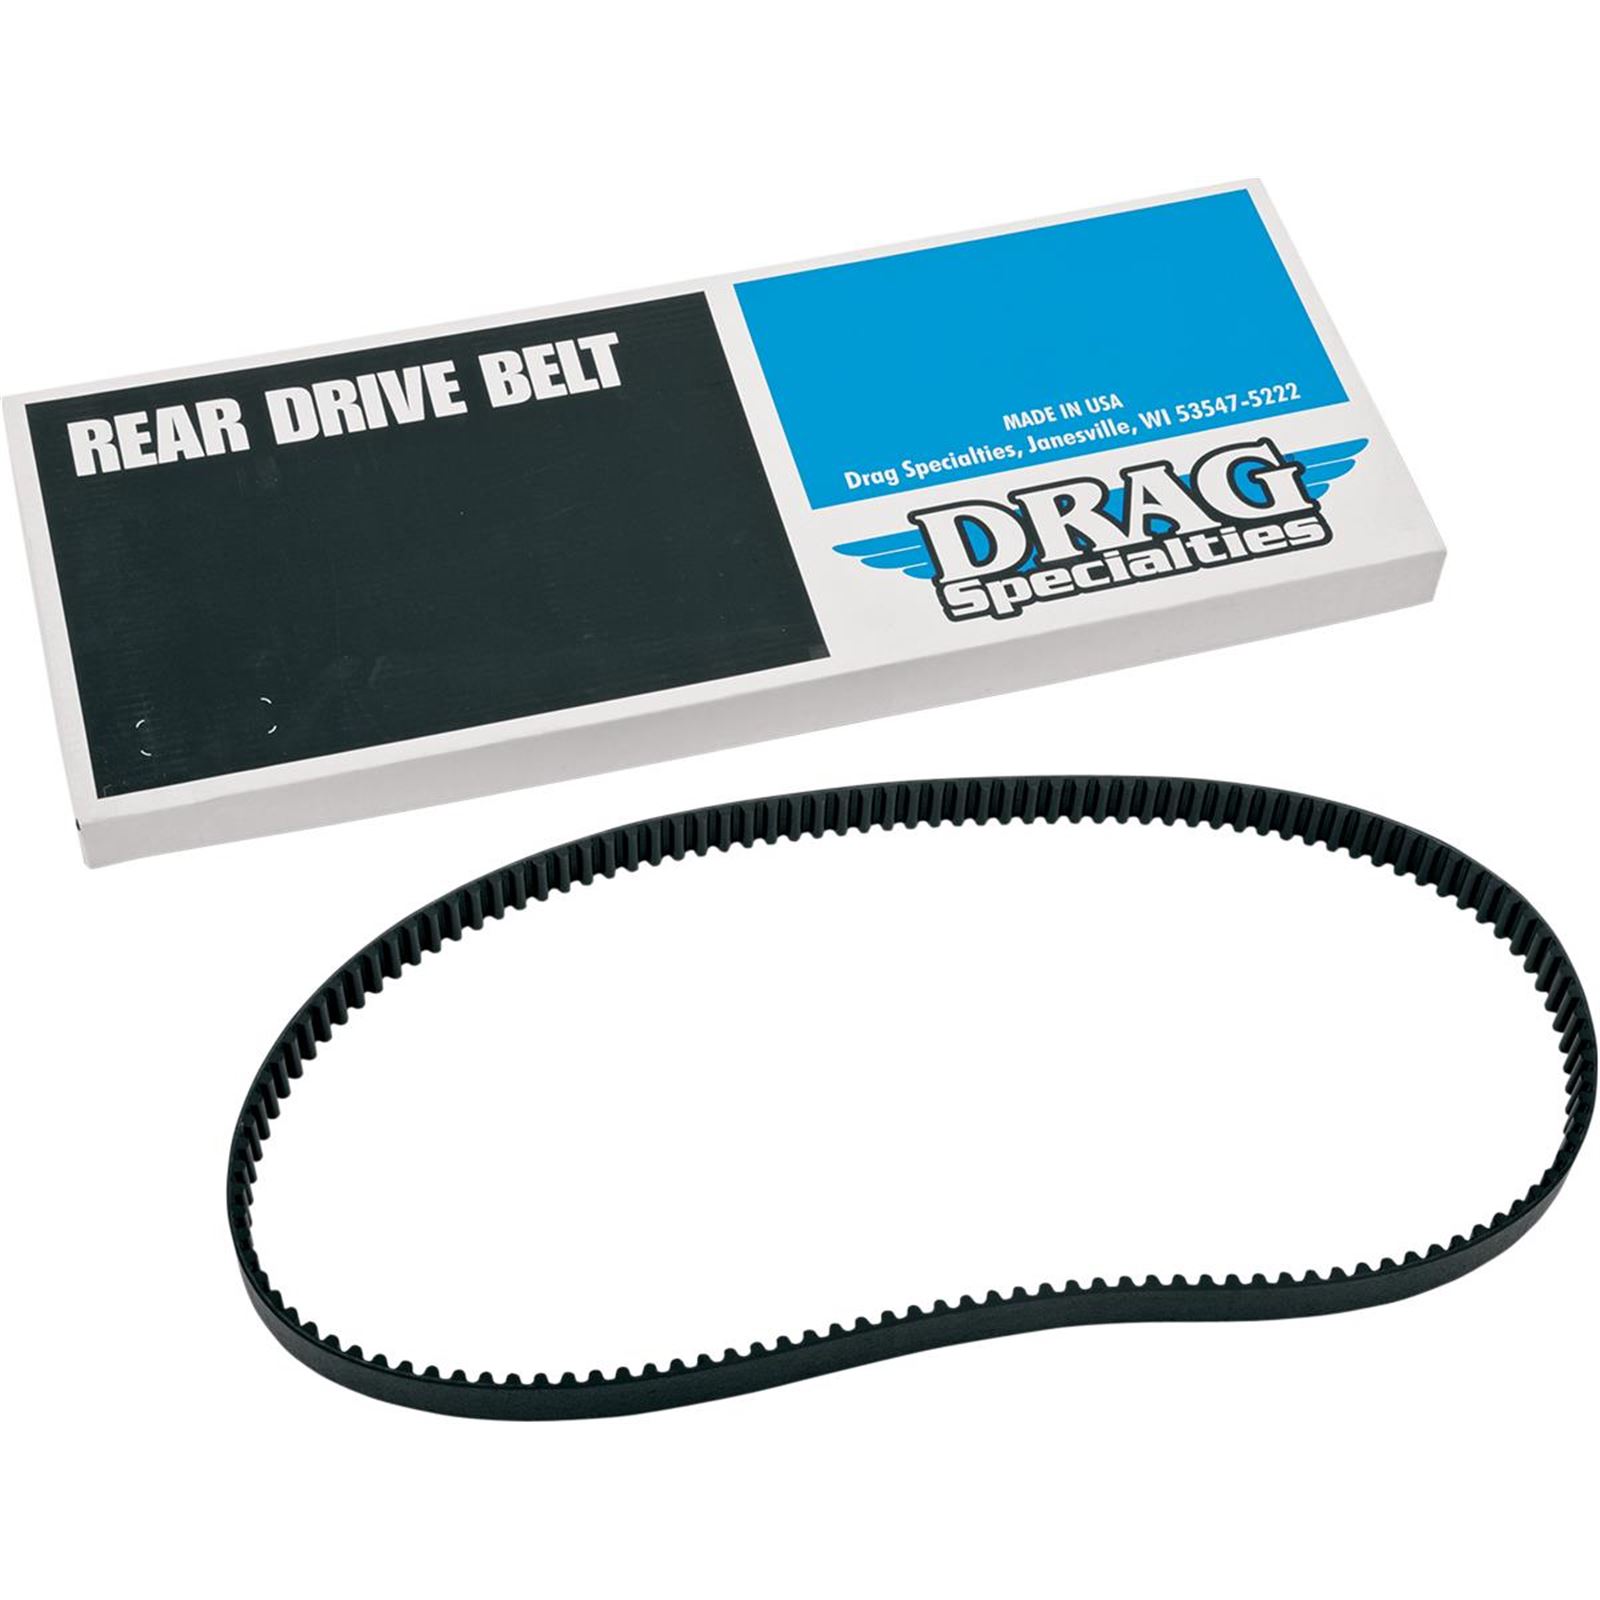 Drag Specialties Rear Drive Belt - 135-Tooth - 1 1/8"